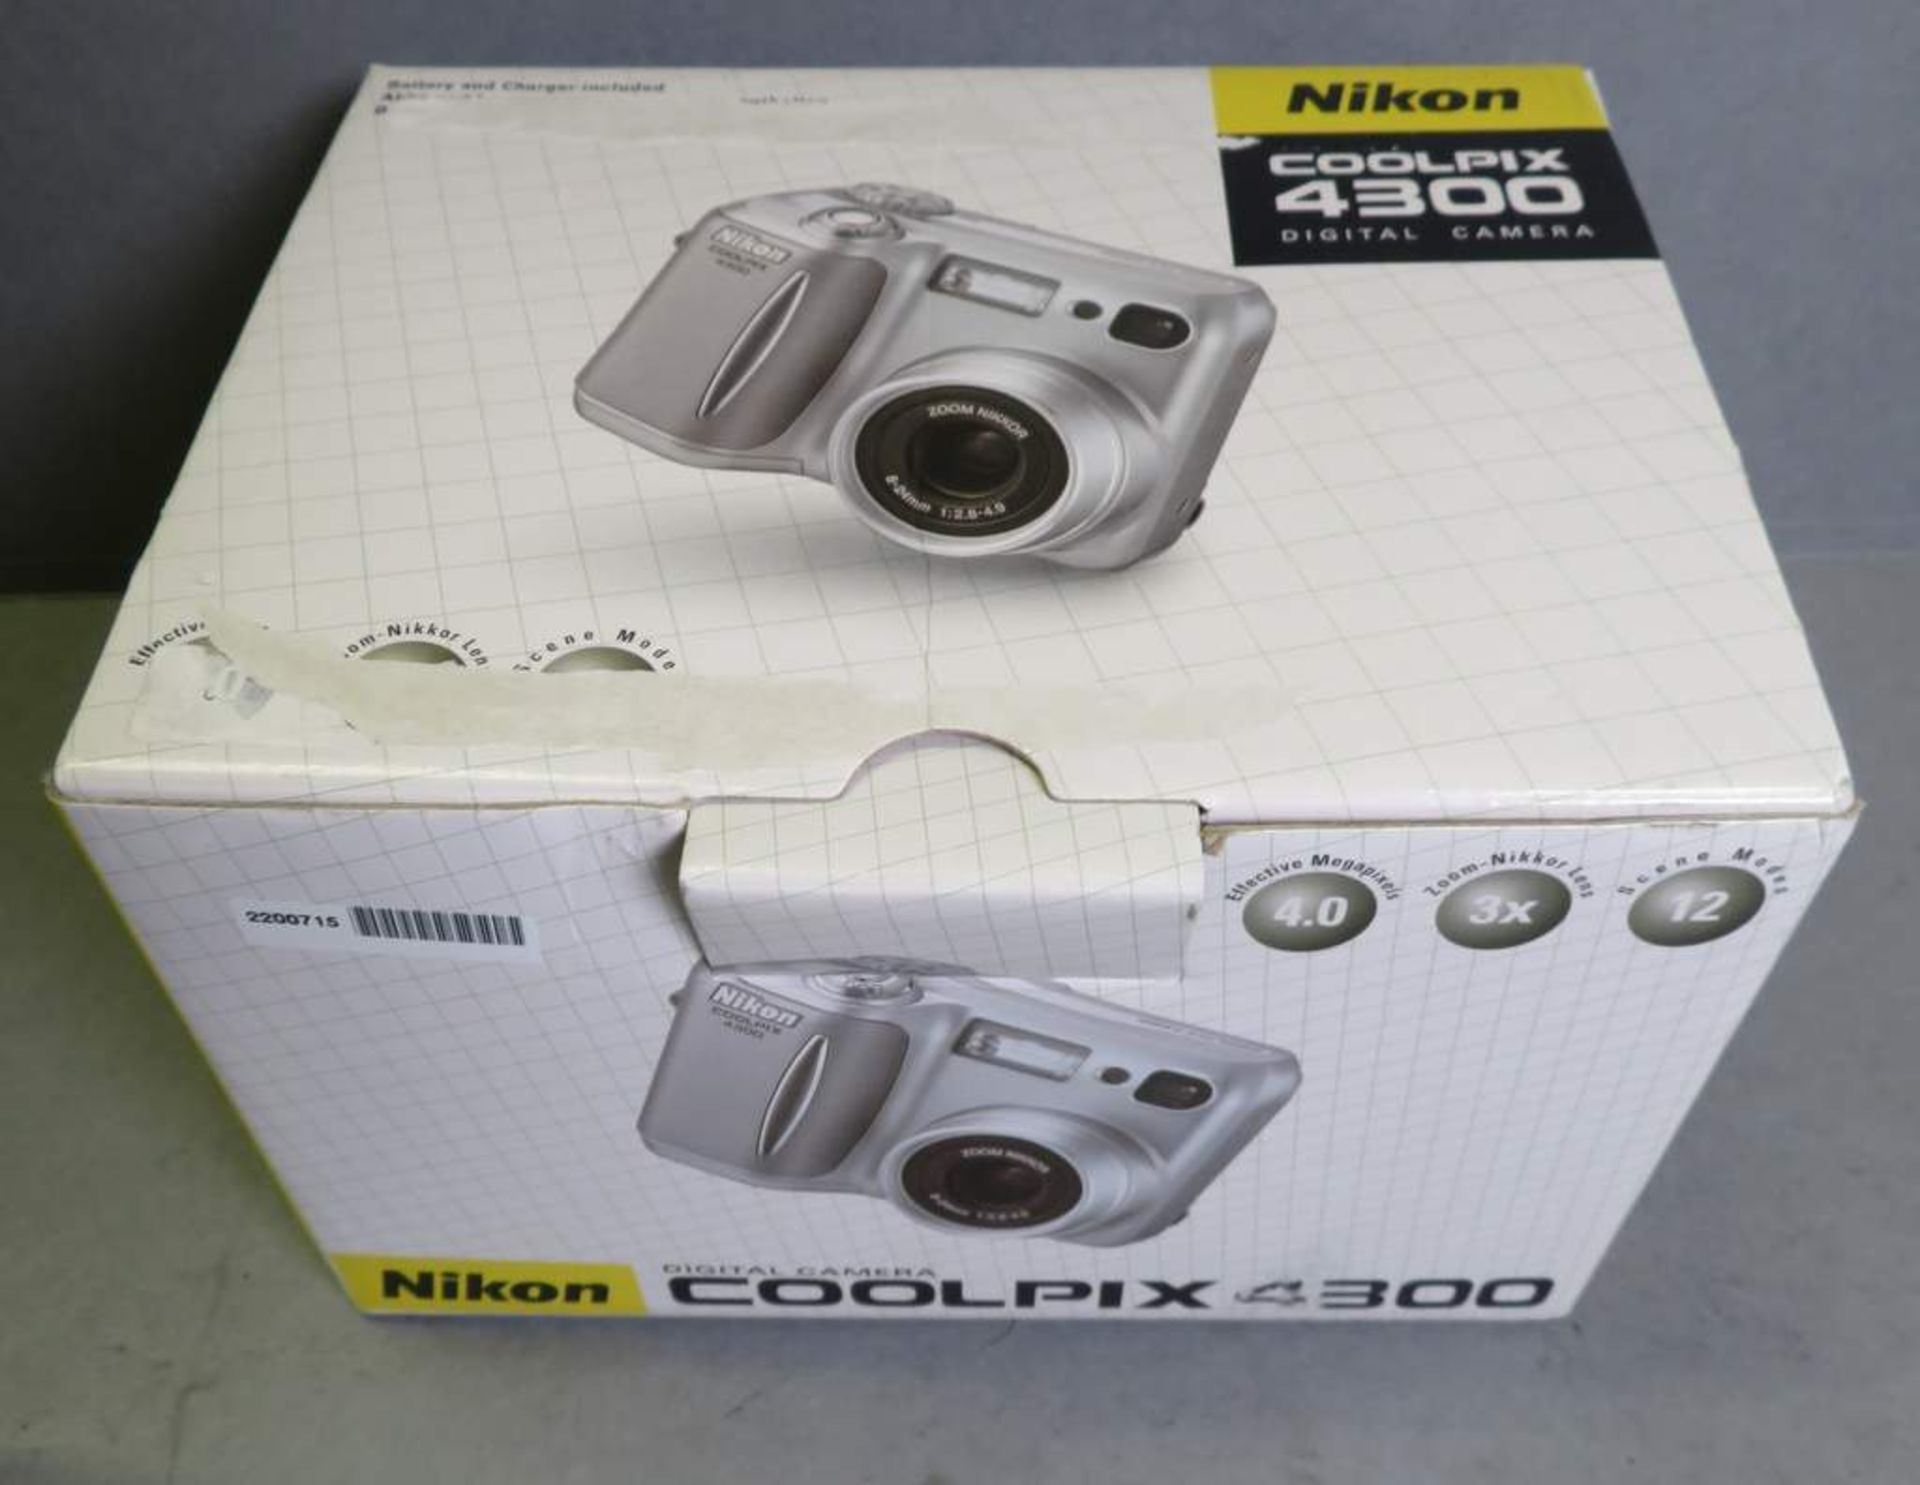 Nikon Coolpix 4300 digital camera - Image 6 of 6